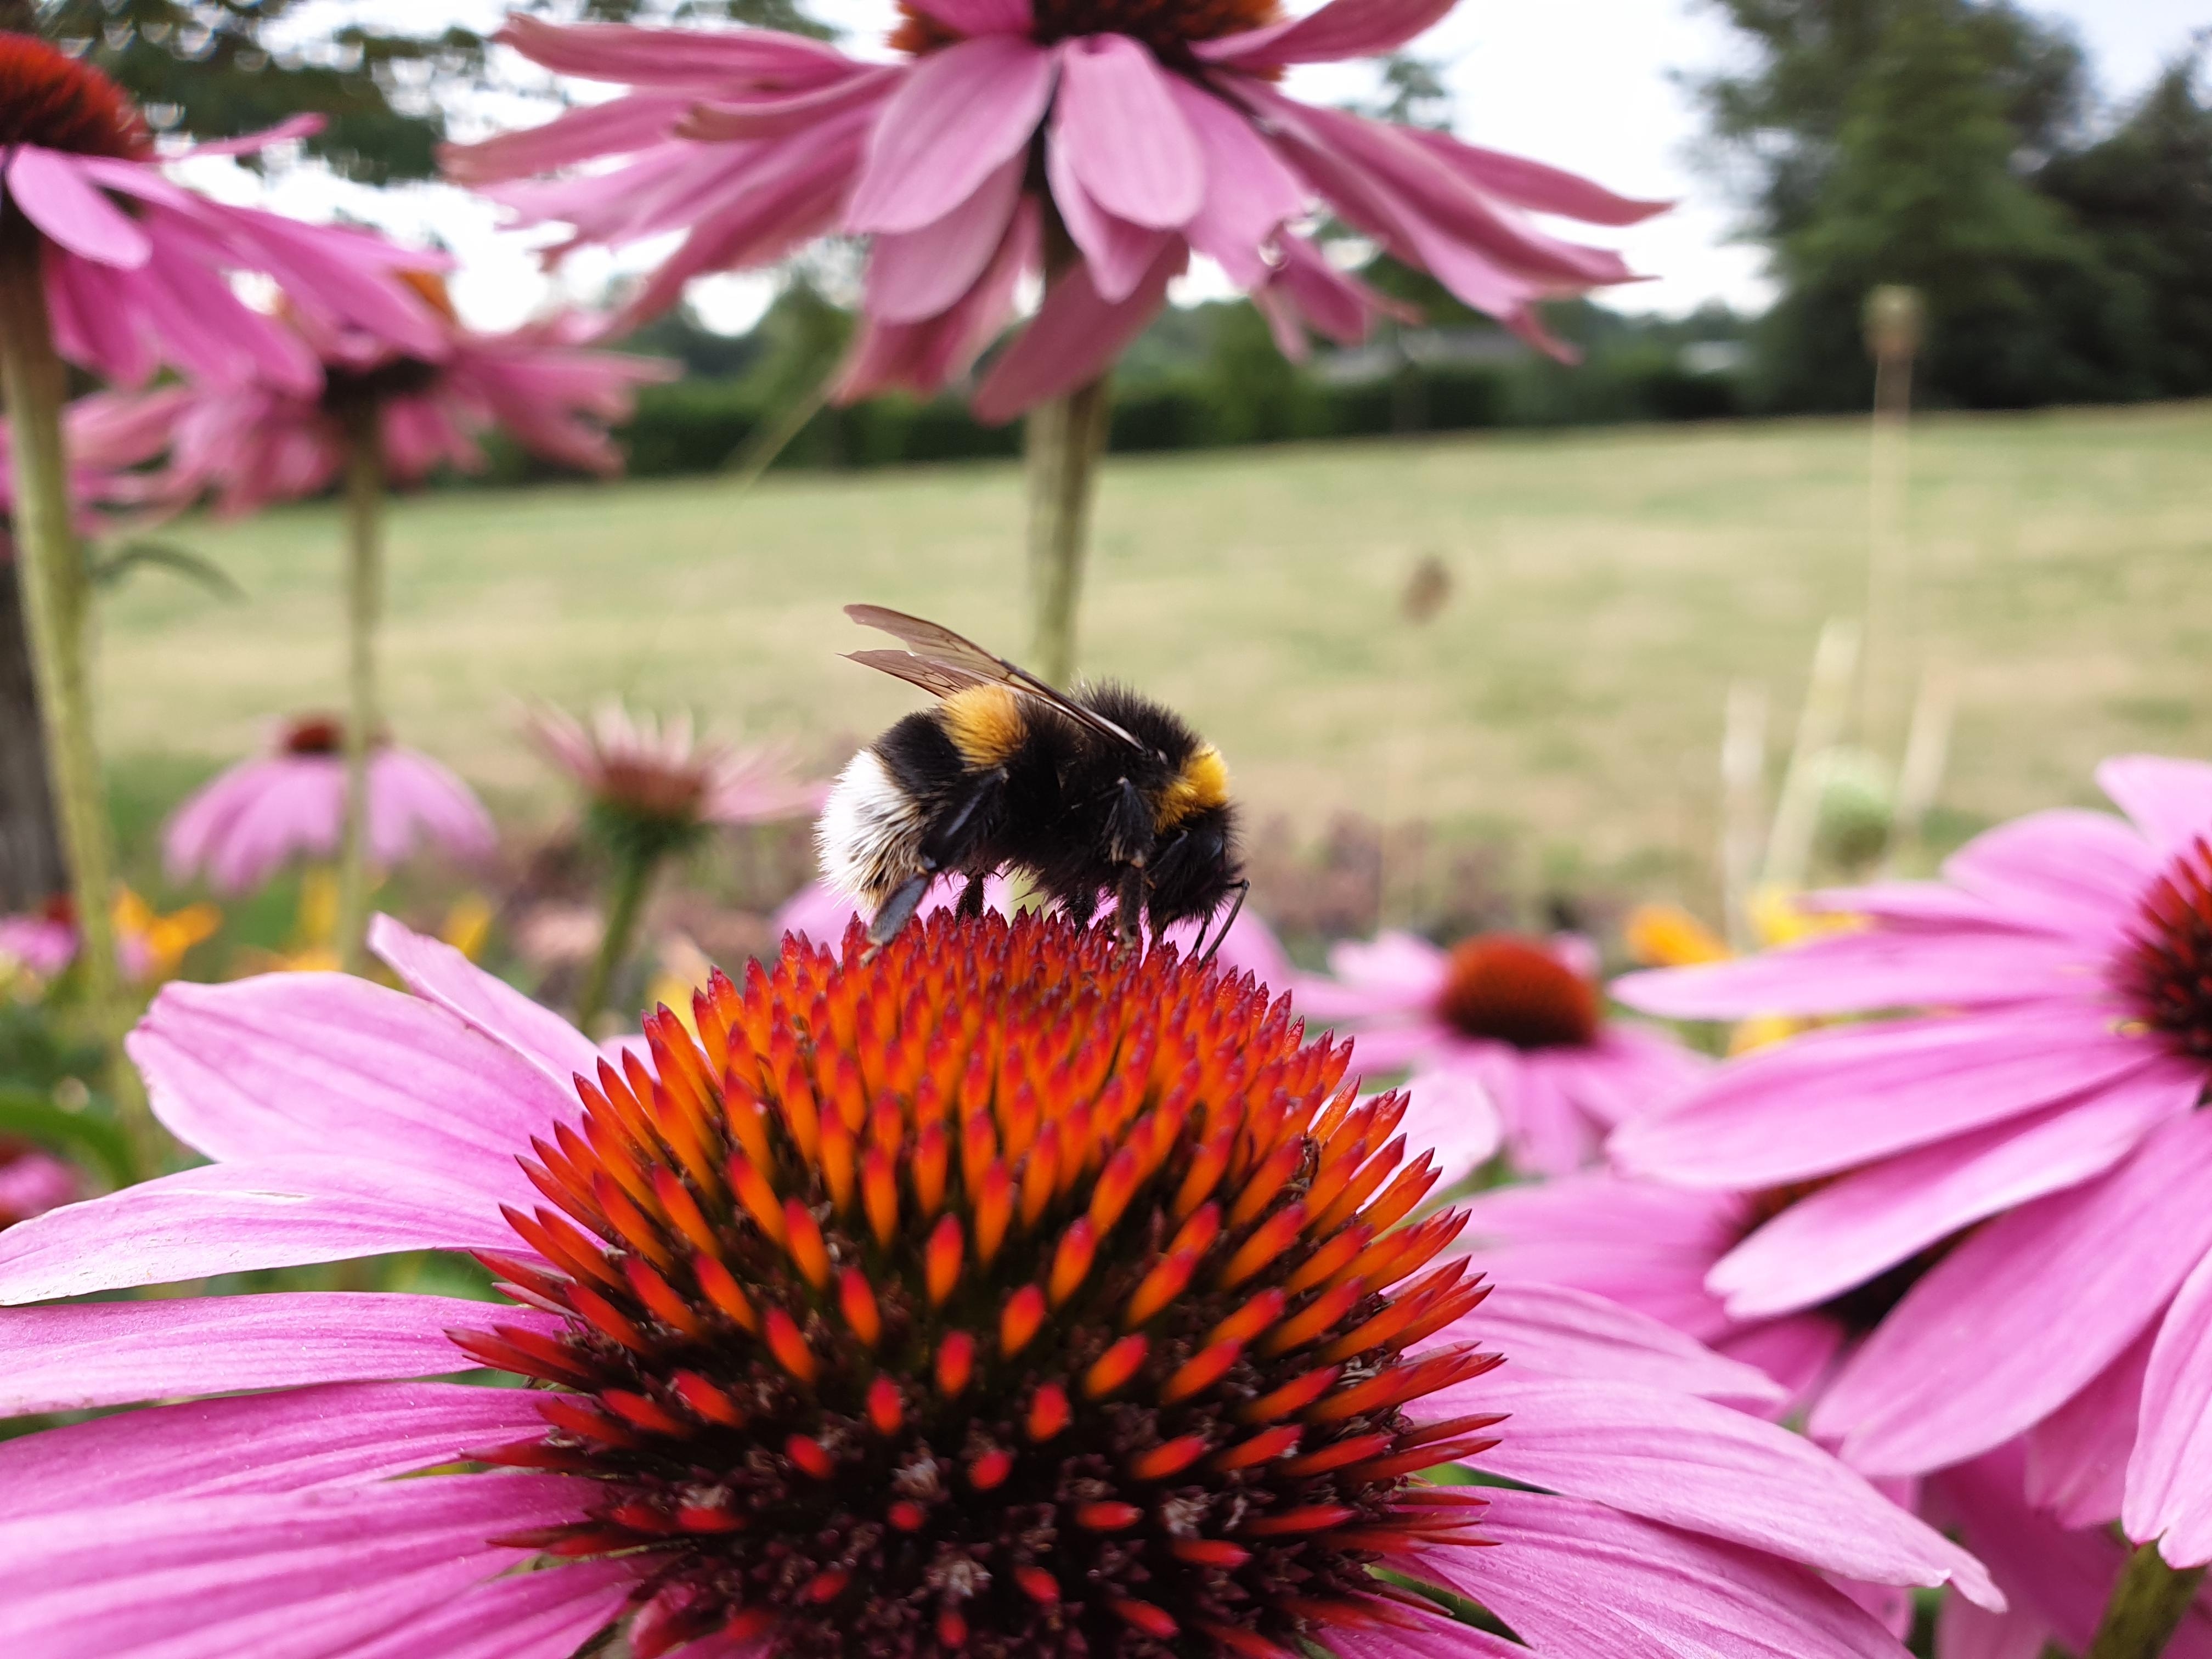 #bumblebee #bienenfutter #savethebee in meinen Garten kommen nur noch Bienenpflanzen!